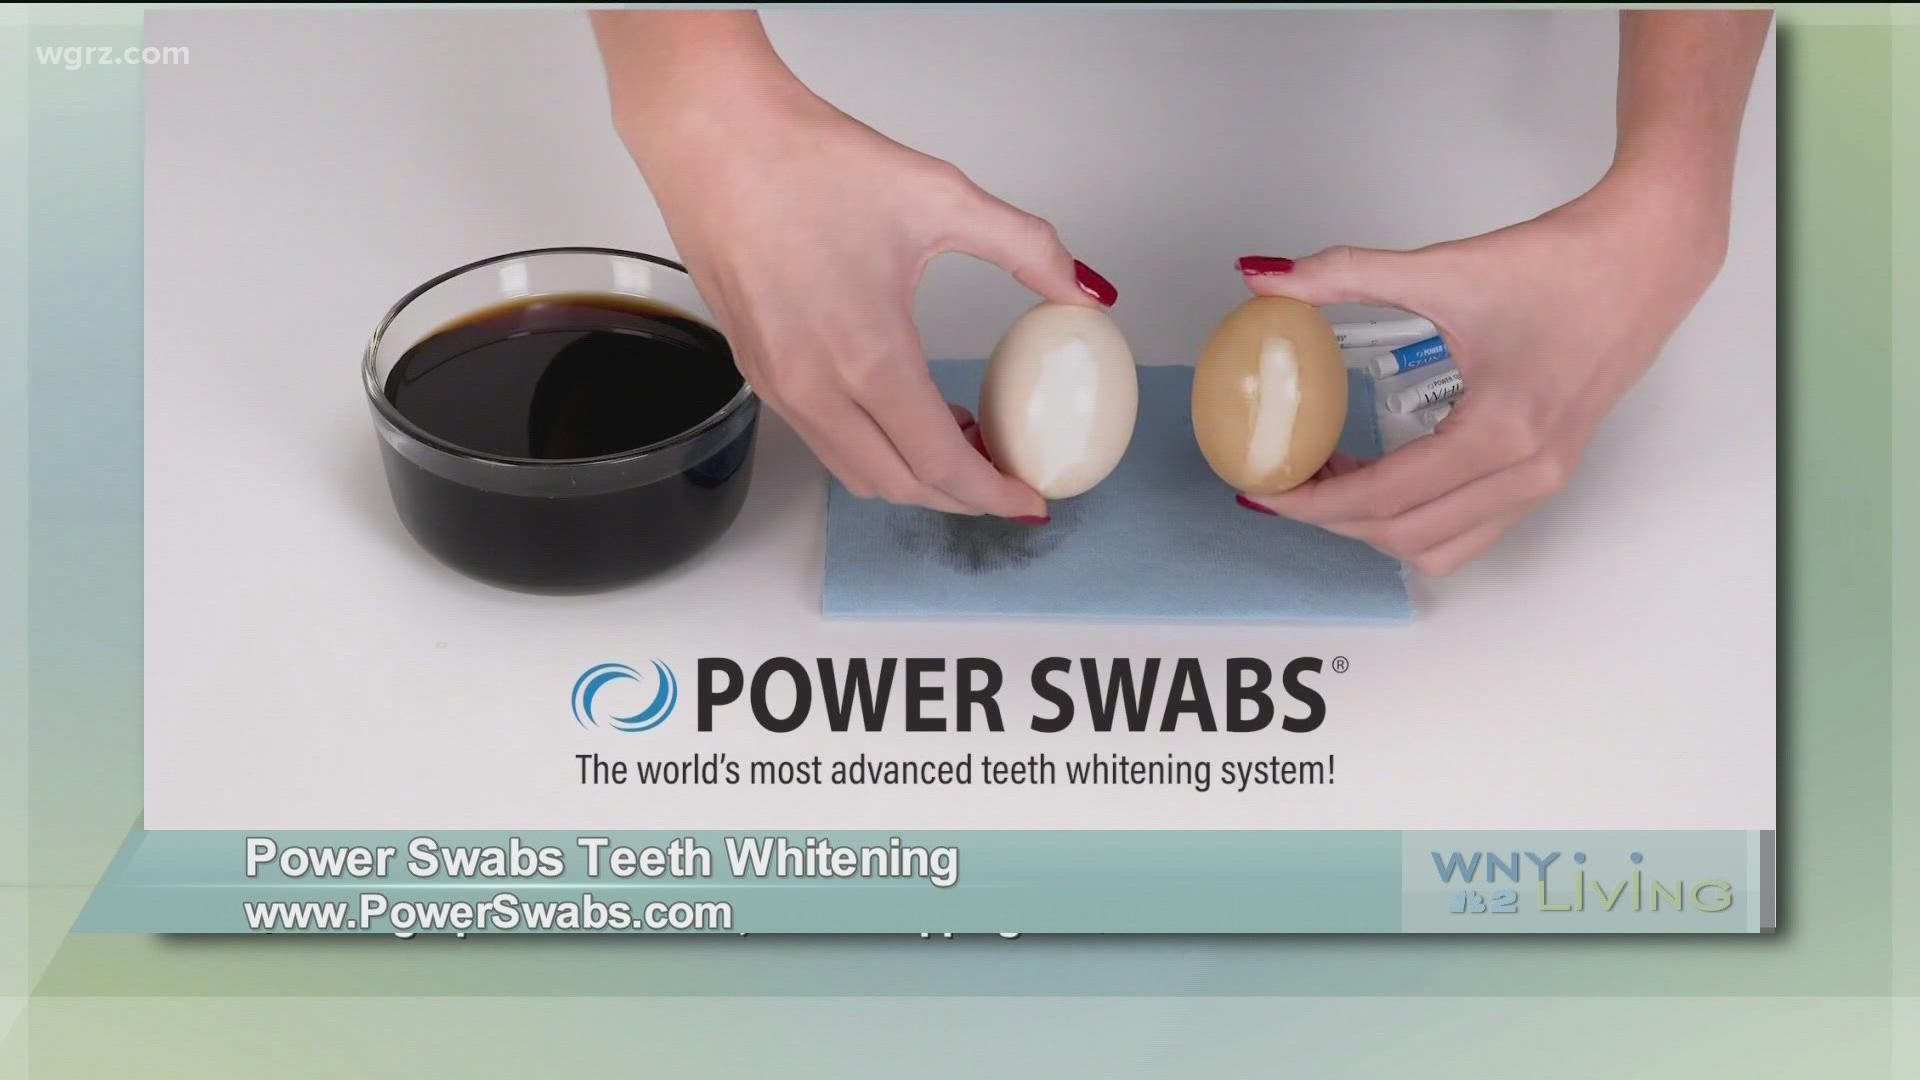 WNY Living - January 1 - Power Swabs Teeth Whitening (THIS VIDEO IS SPONSORED BY POWER SWABS TEETH WHITENING)